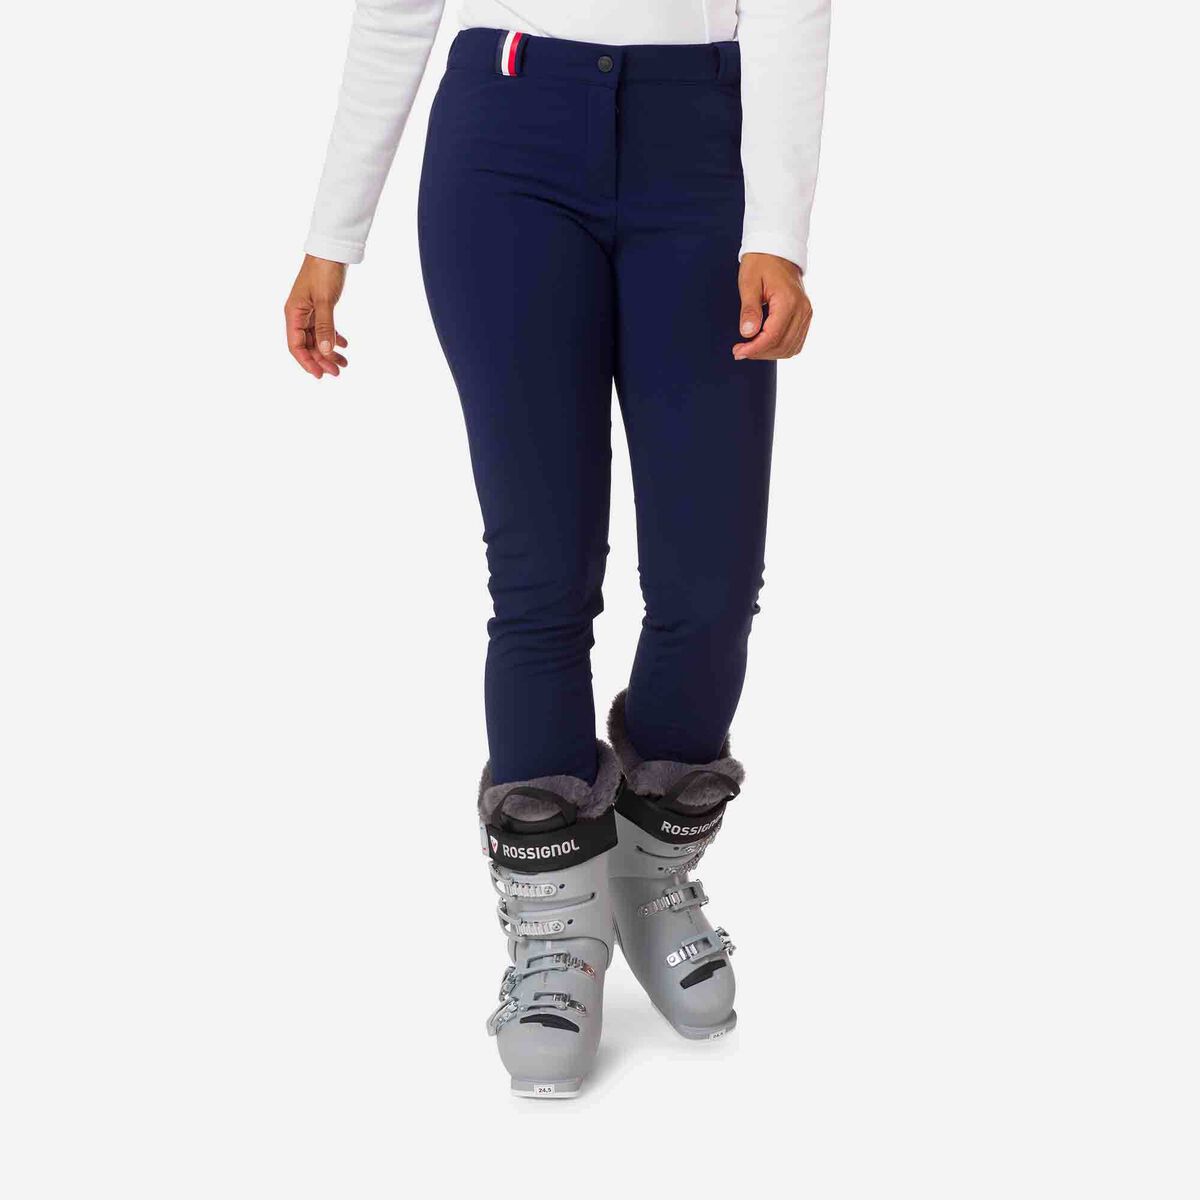 Women's Ski Fuseau Pants, Ski pants